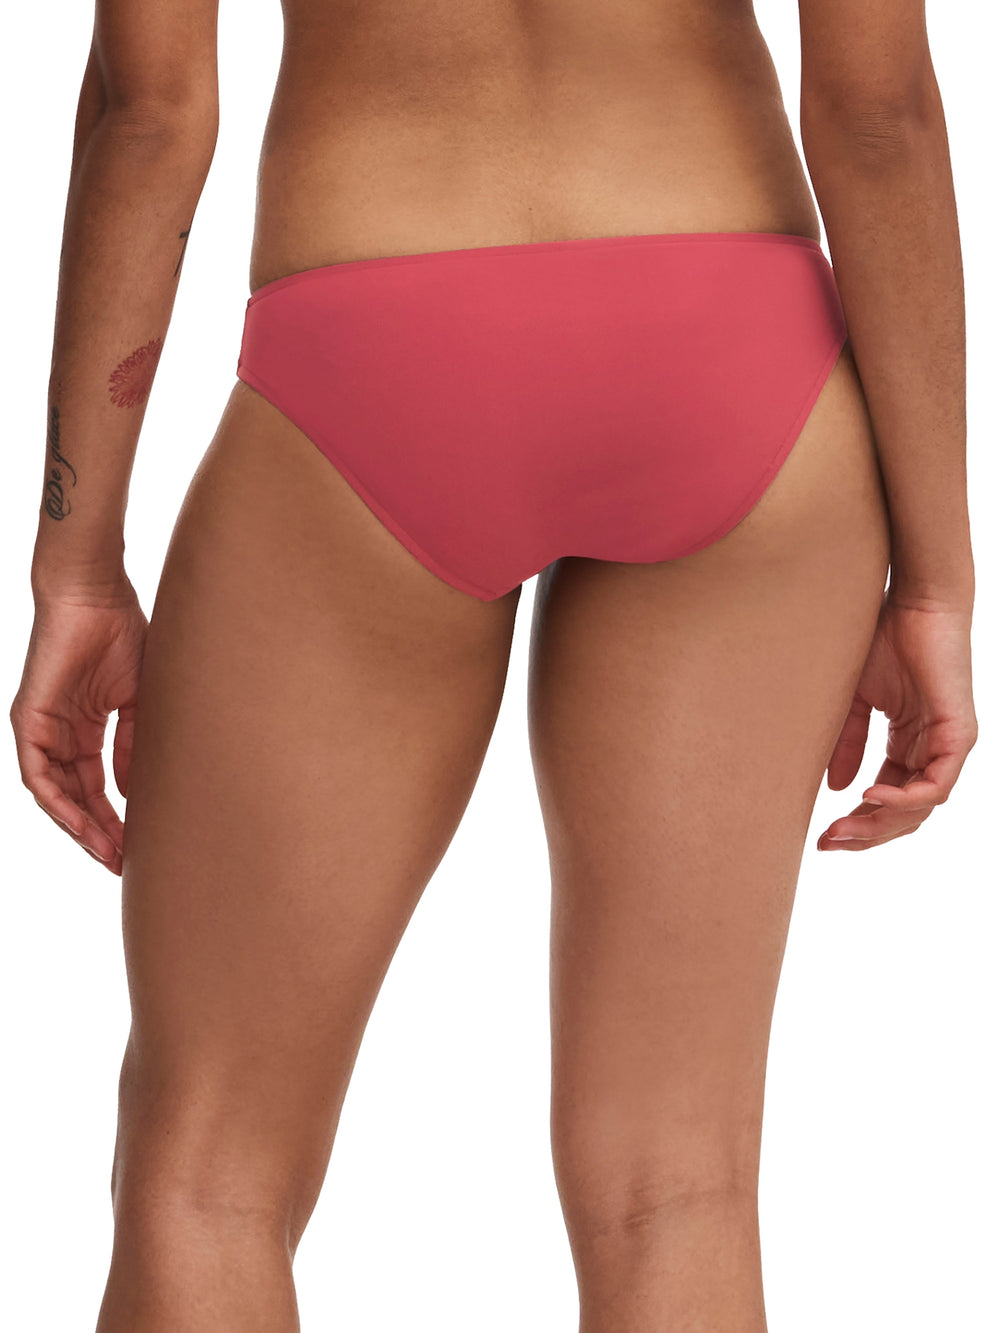 Chantelle Swimwear Inspire Brief - Garnet Red Bikini Brief Chantelle 